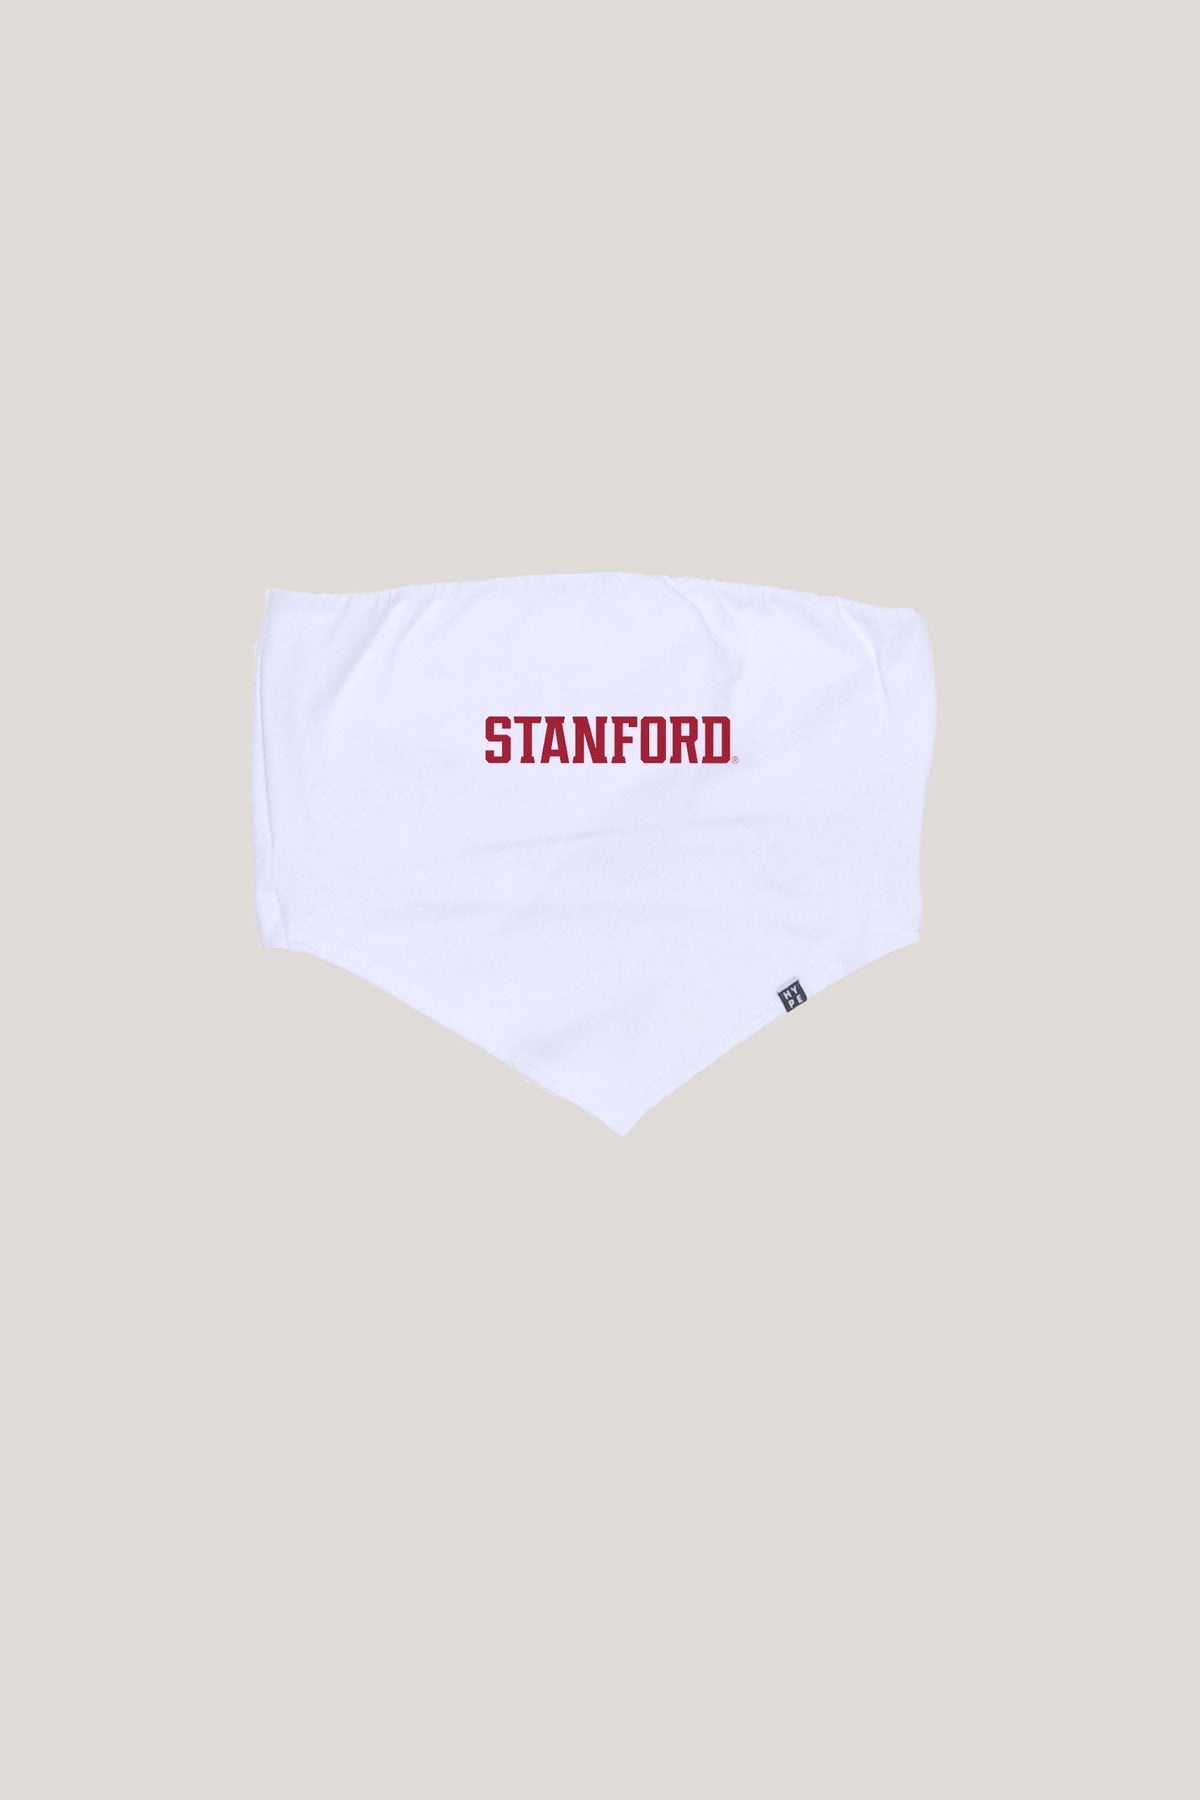 Stanford Bandana Top